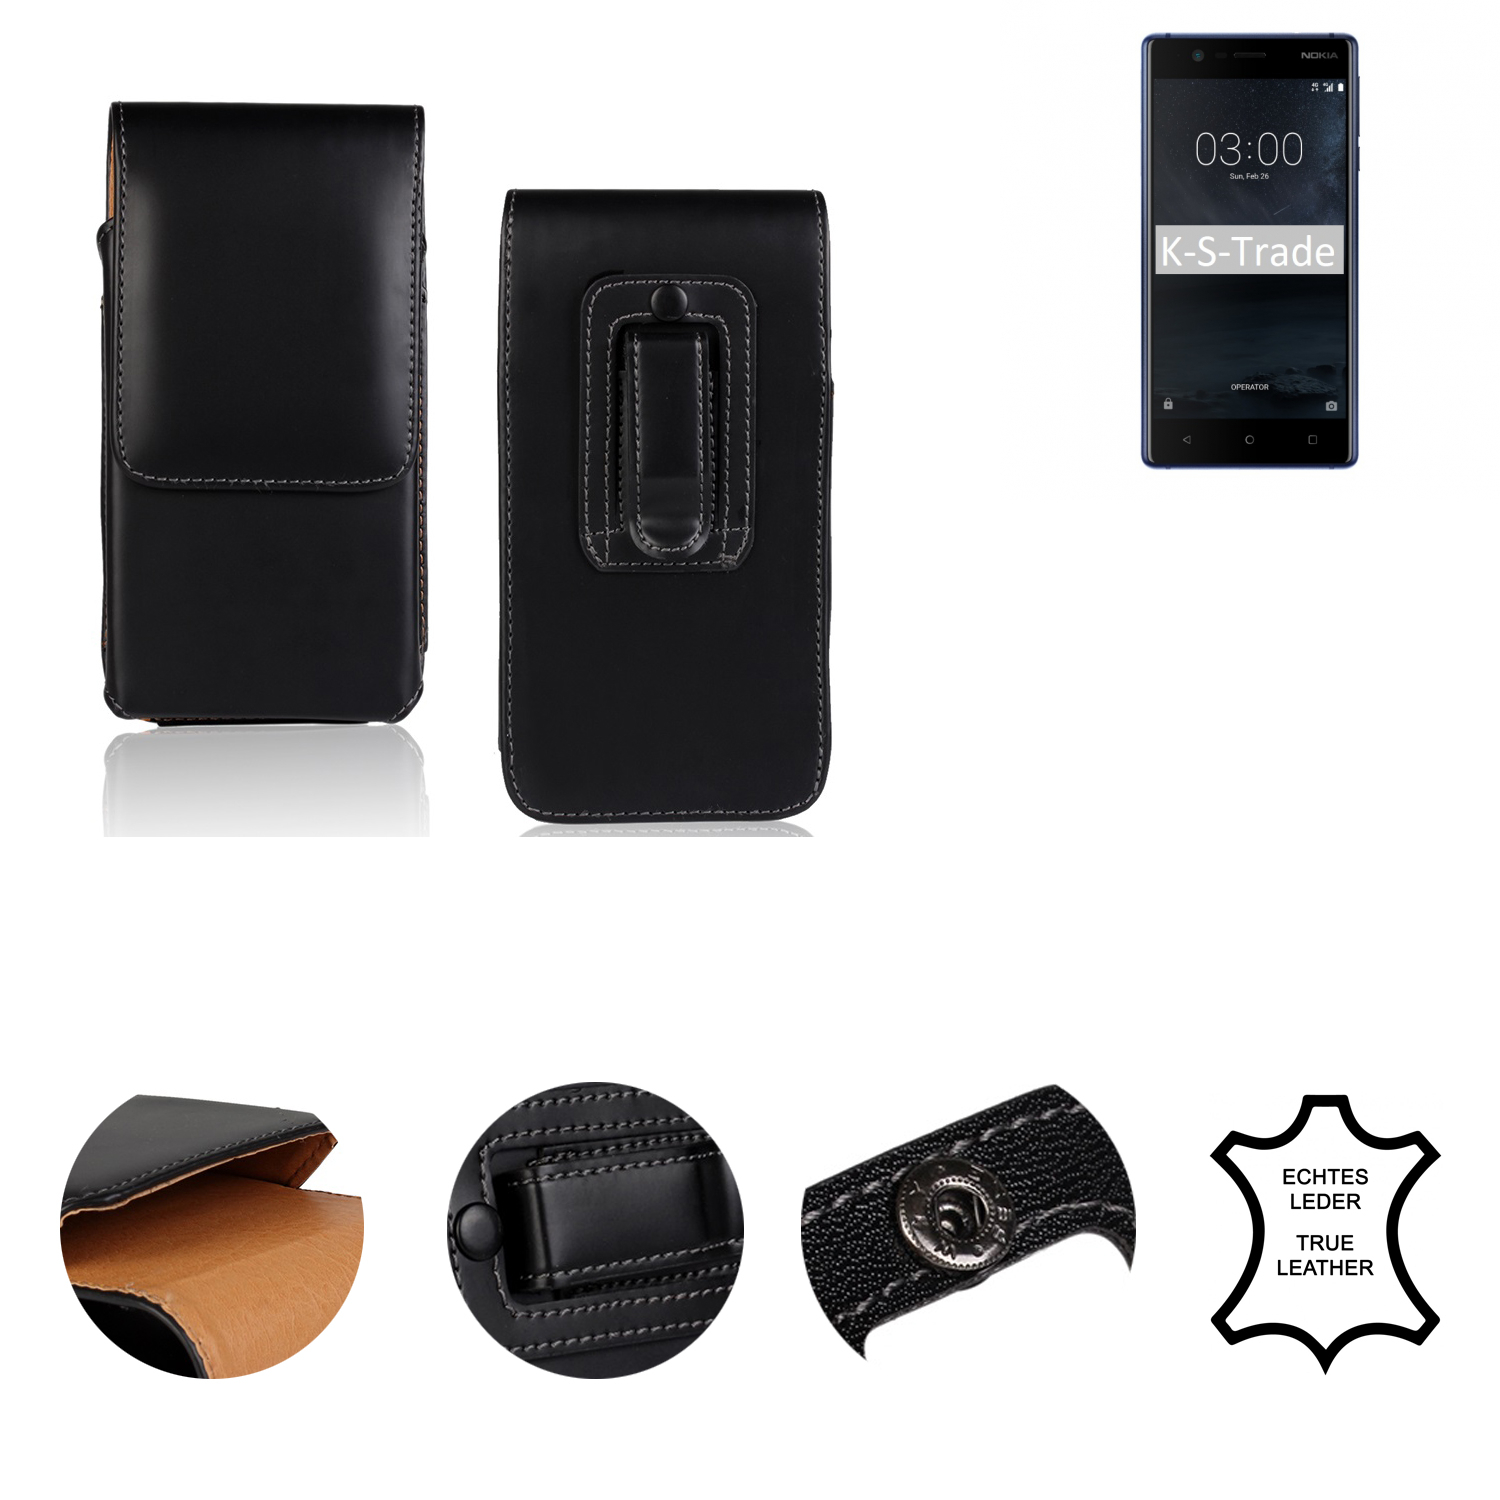 K-S-TRADE Holster Dual-SIM, Holster, Nokia, Schutzhülle, schwarz 3